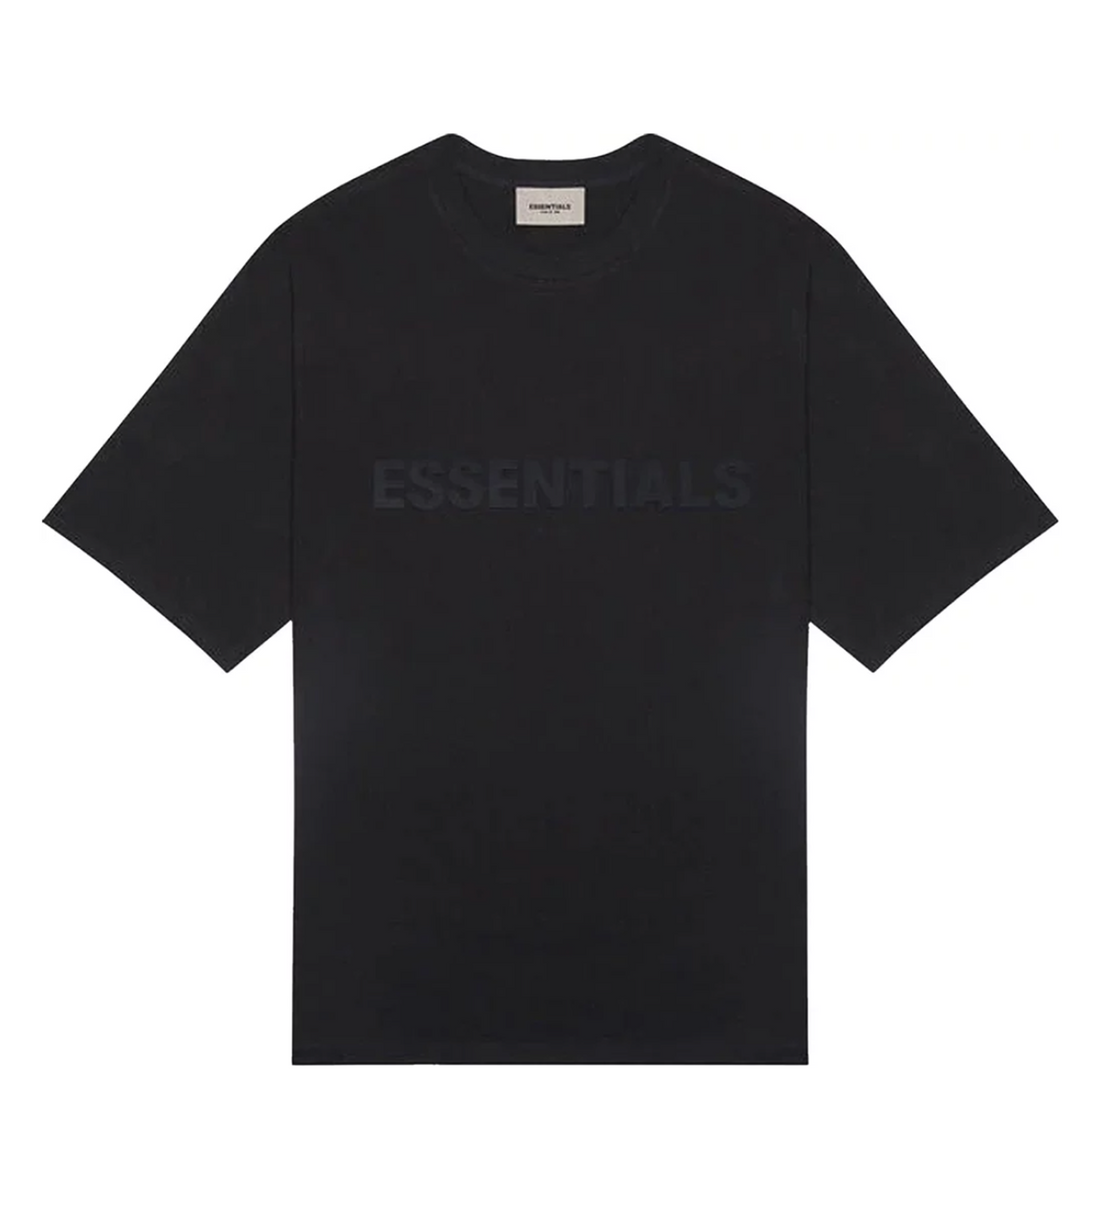 Essentials Black Tee Front Logo